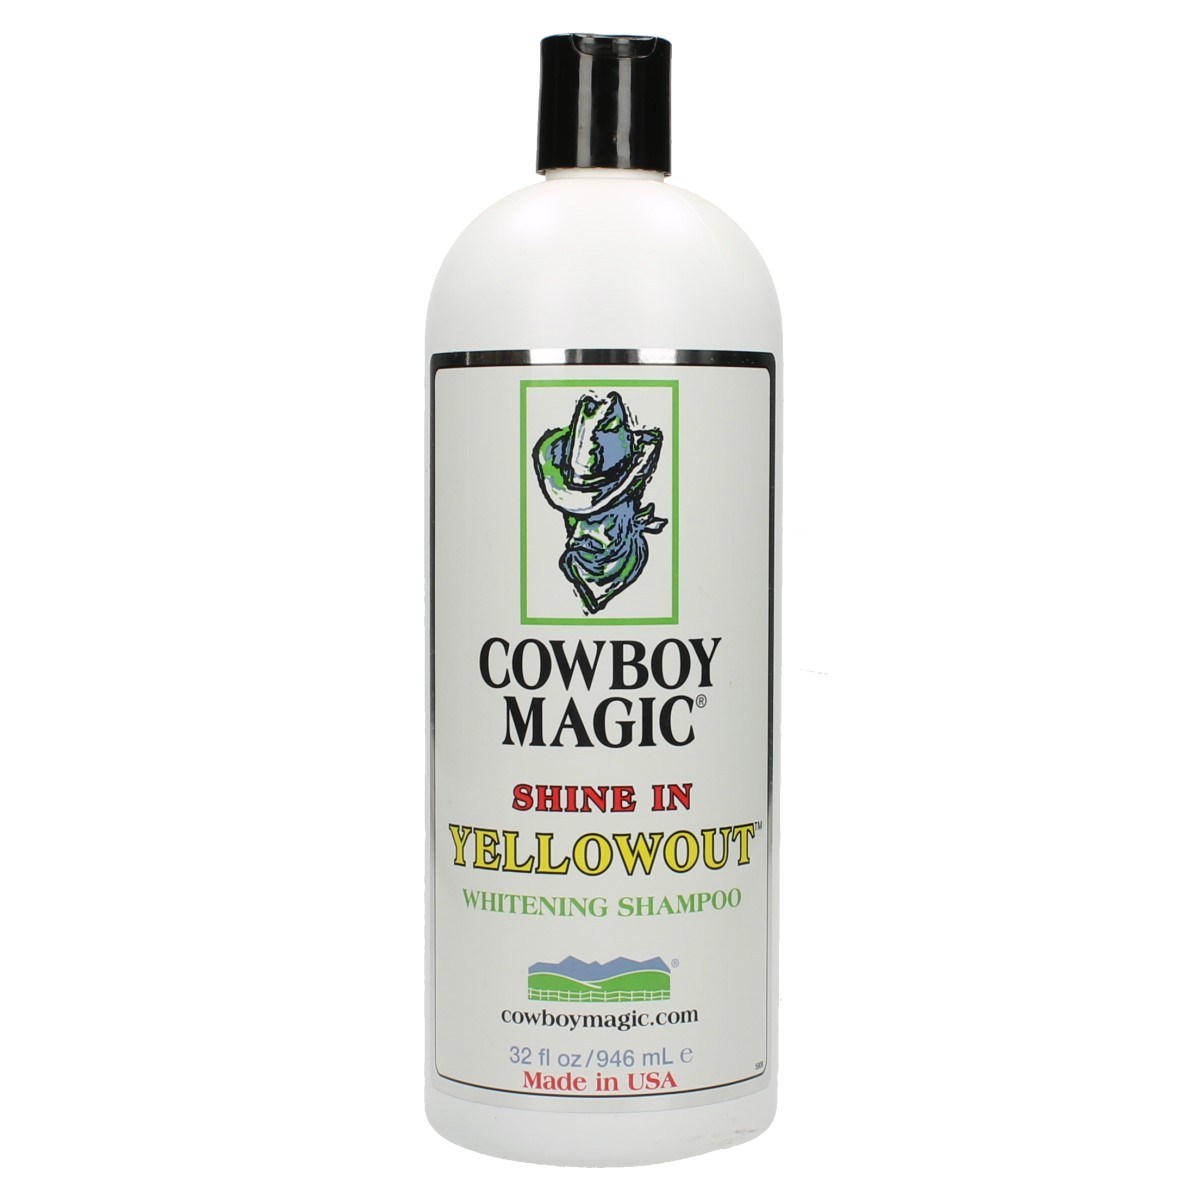 Yellowout Shampoo Cowboy Magic Multicolour